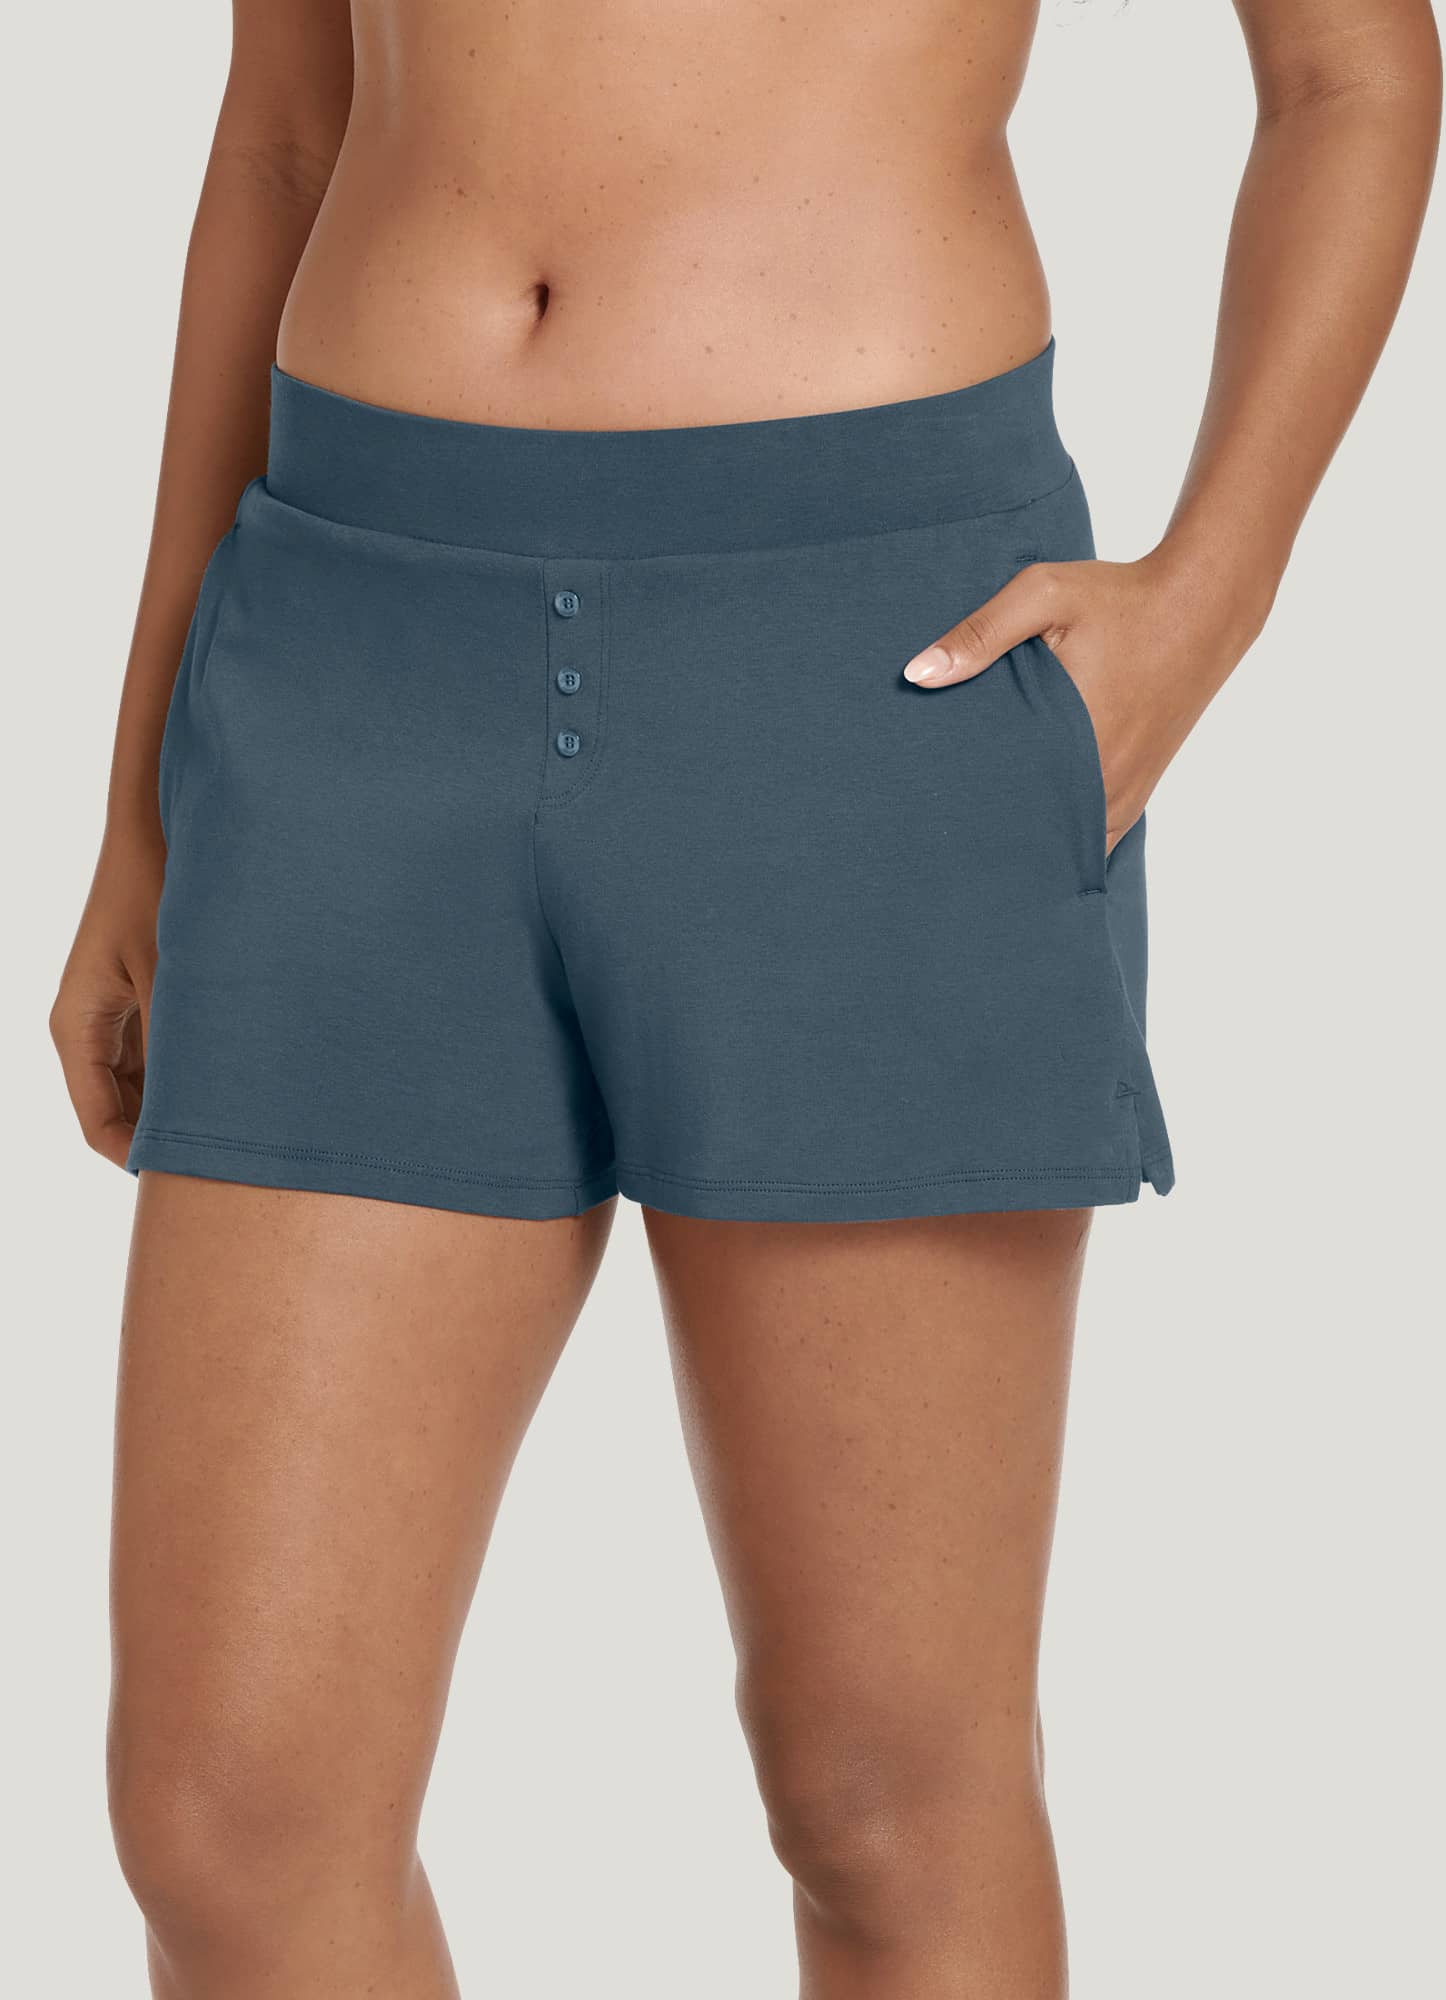 Jockey Girl's & Women's Side Pocket Printed Sleep Boxer Shorts